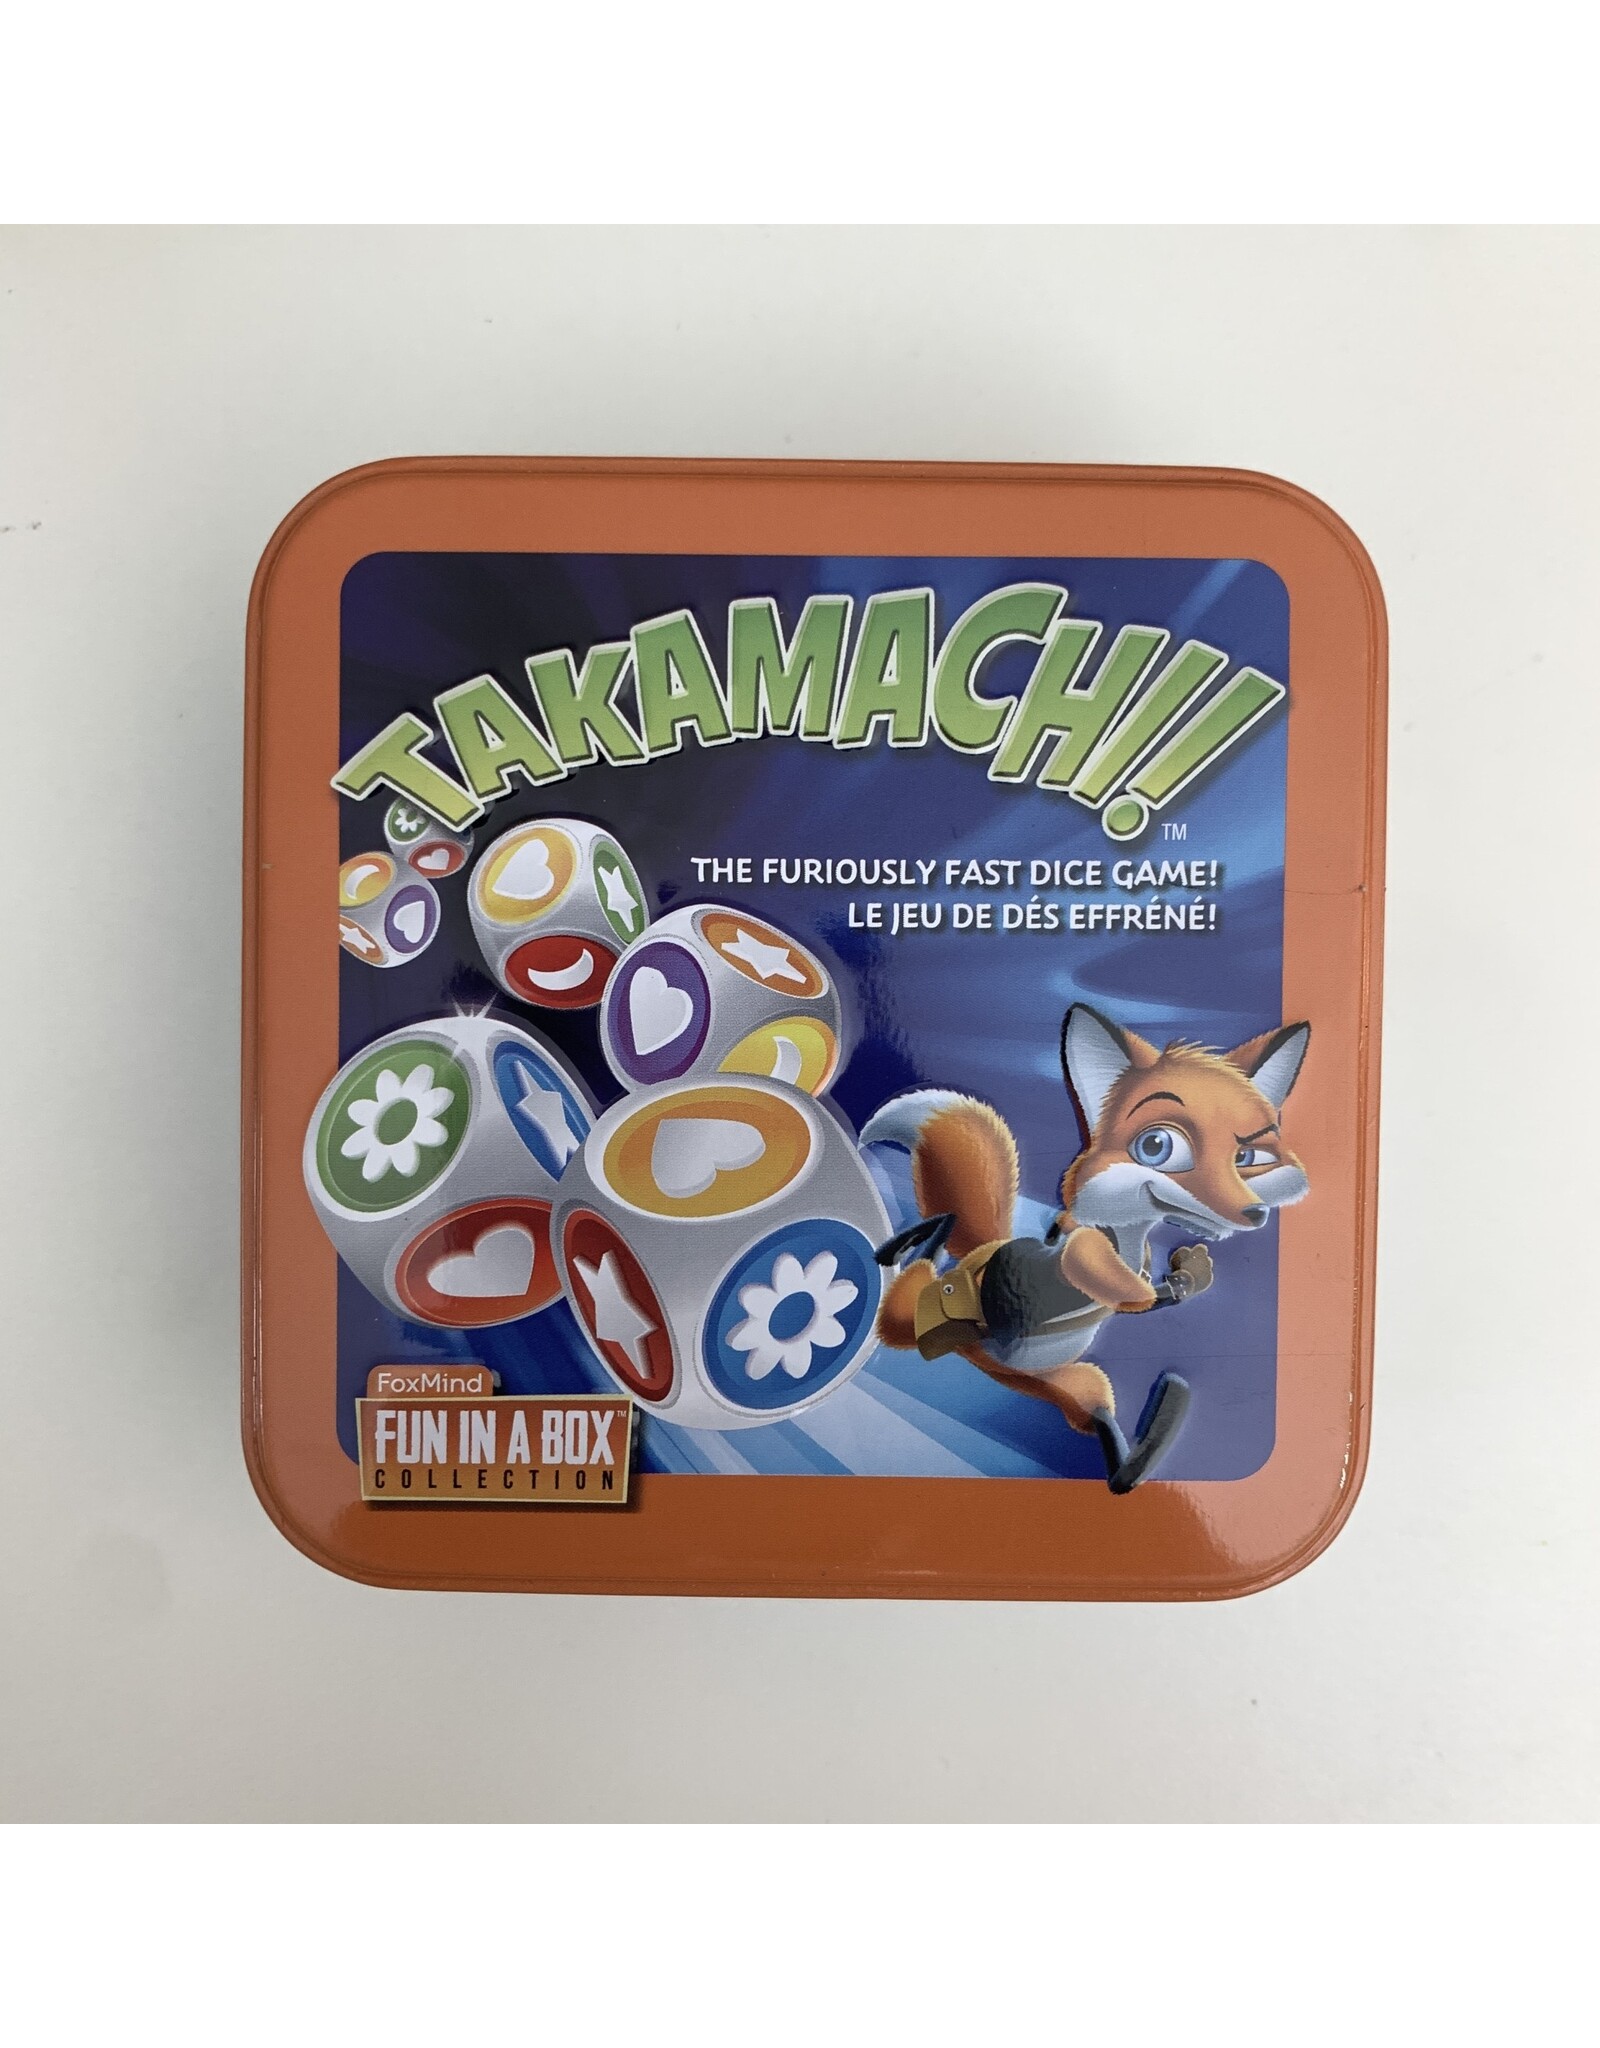 FoxMind Takamachi! used dice game (2014)